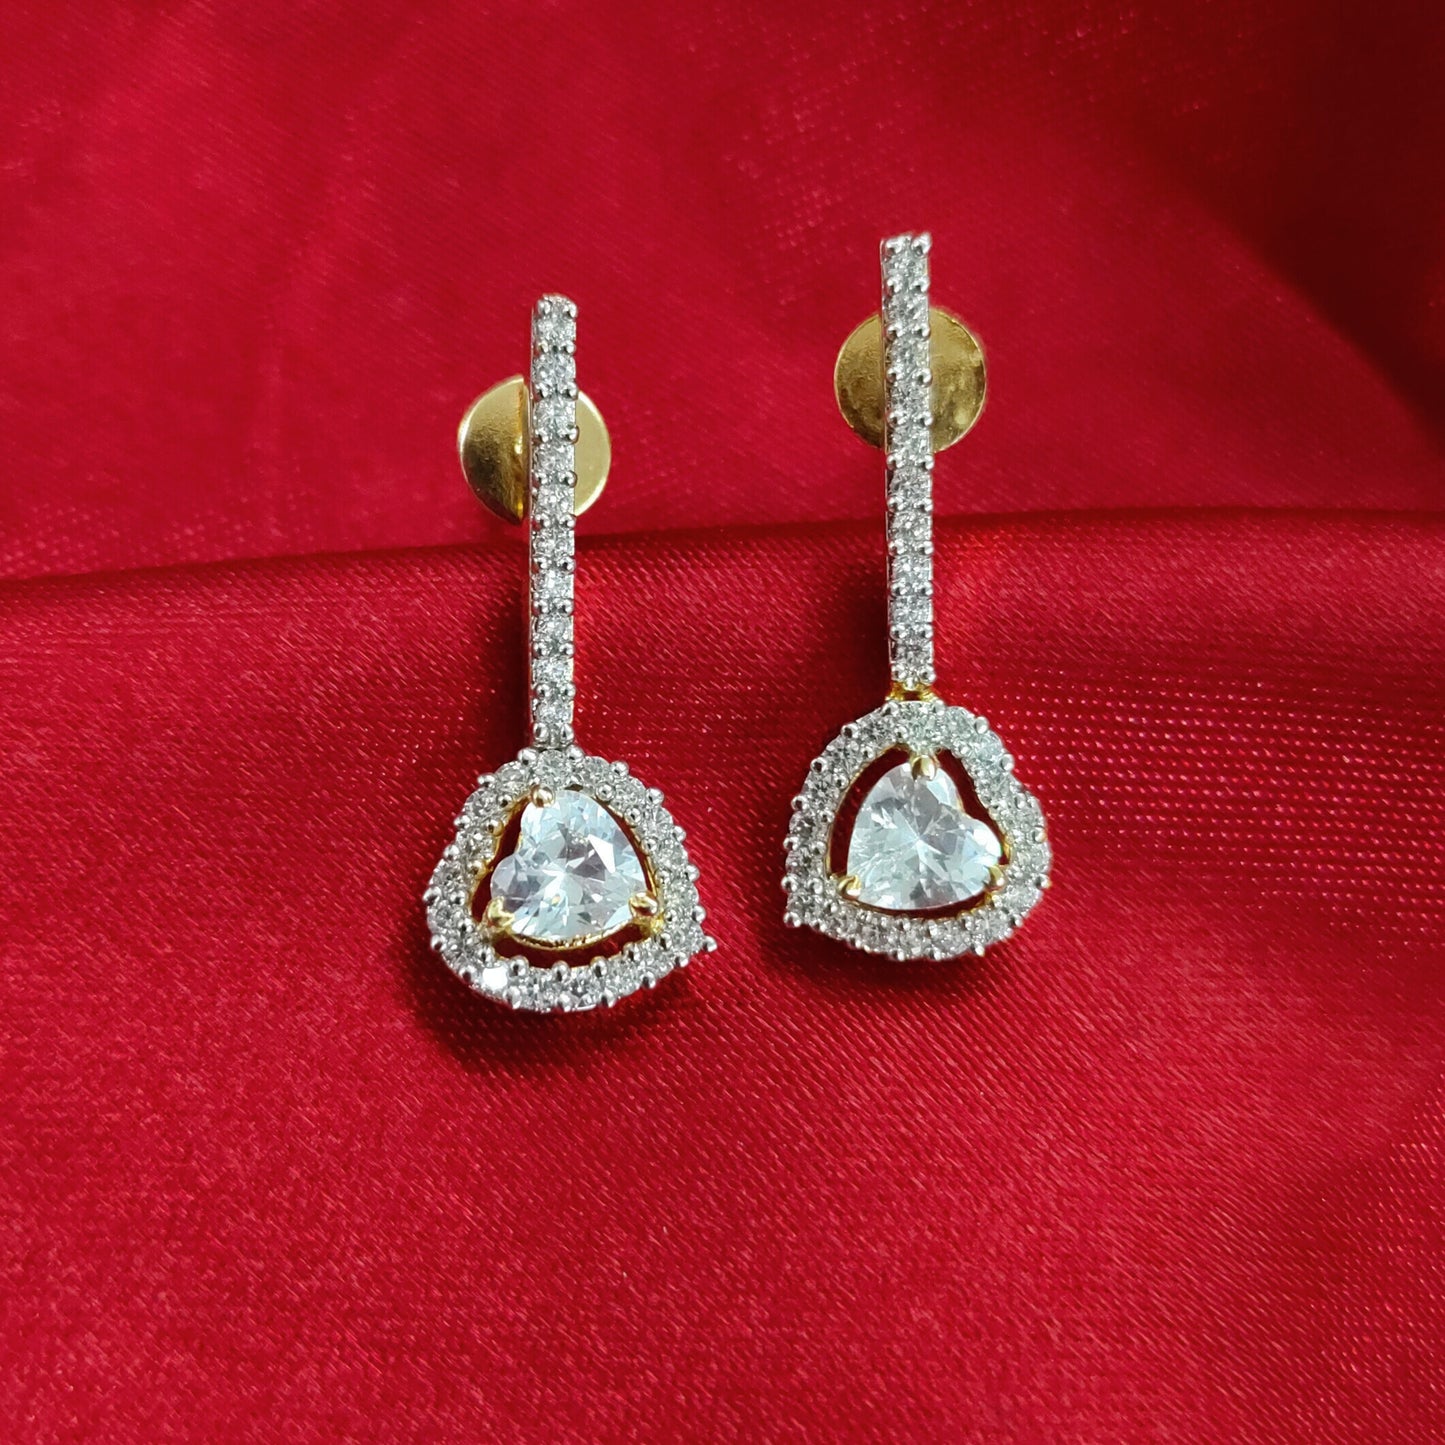 Bdiva 18k Gold Plated Heart Shaped Dangle Earrings